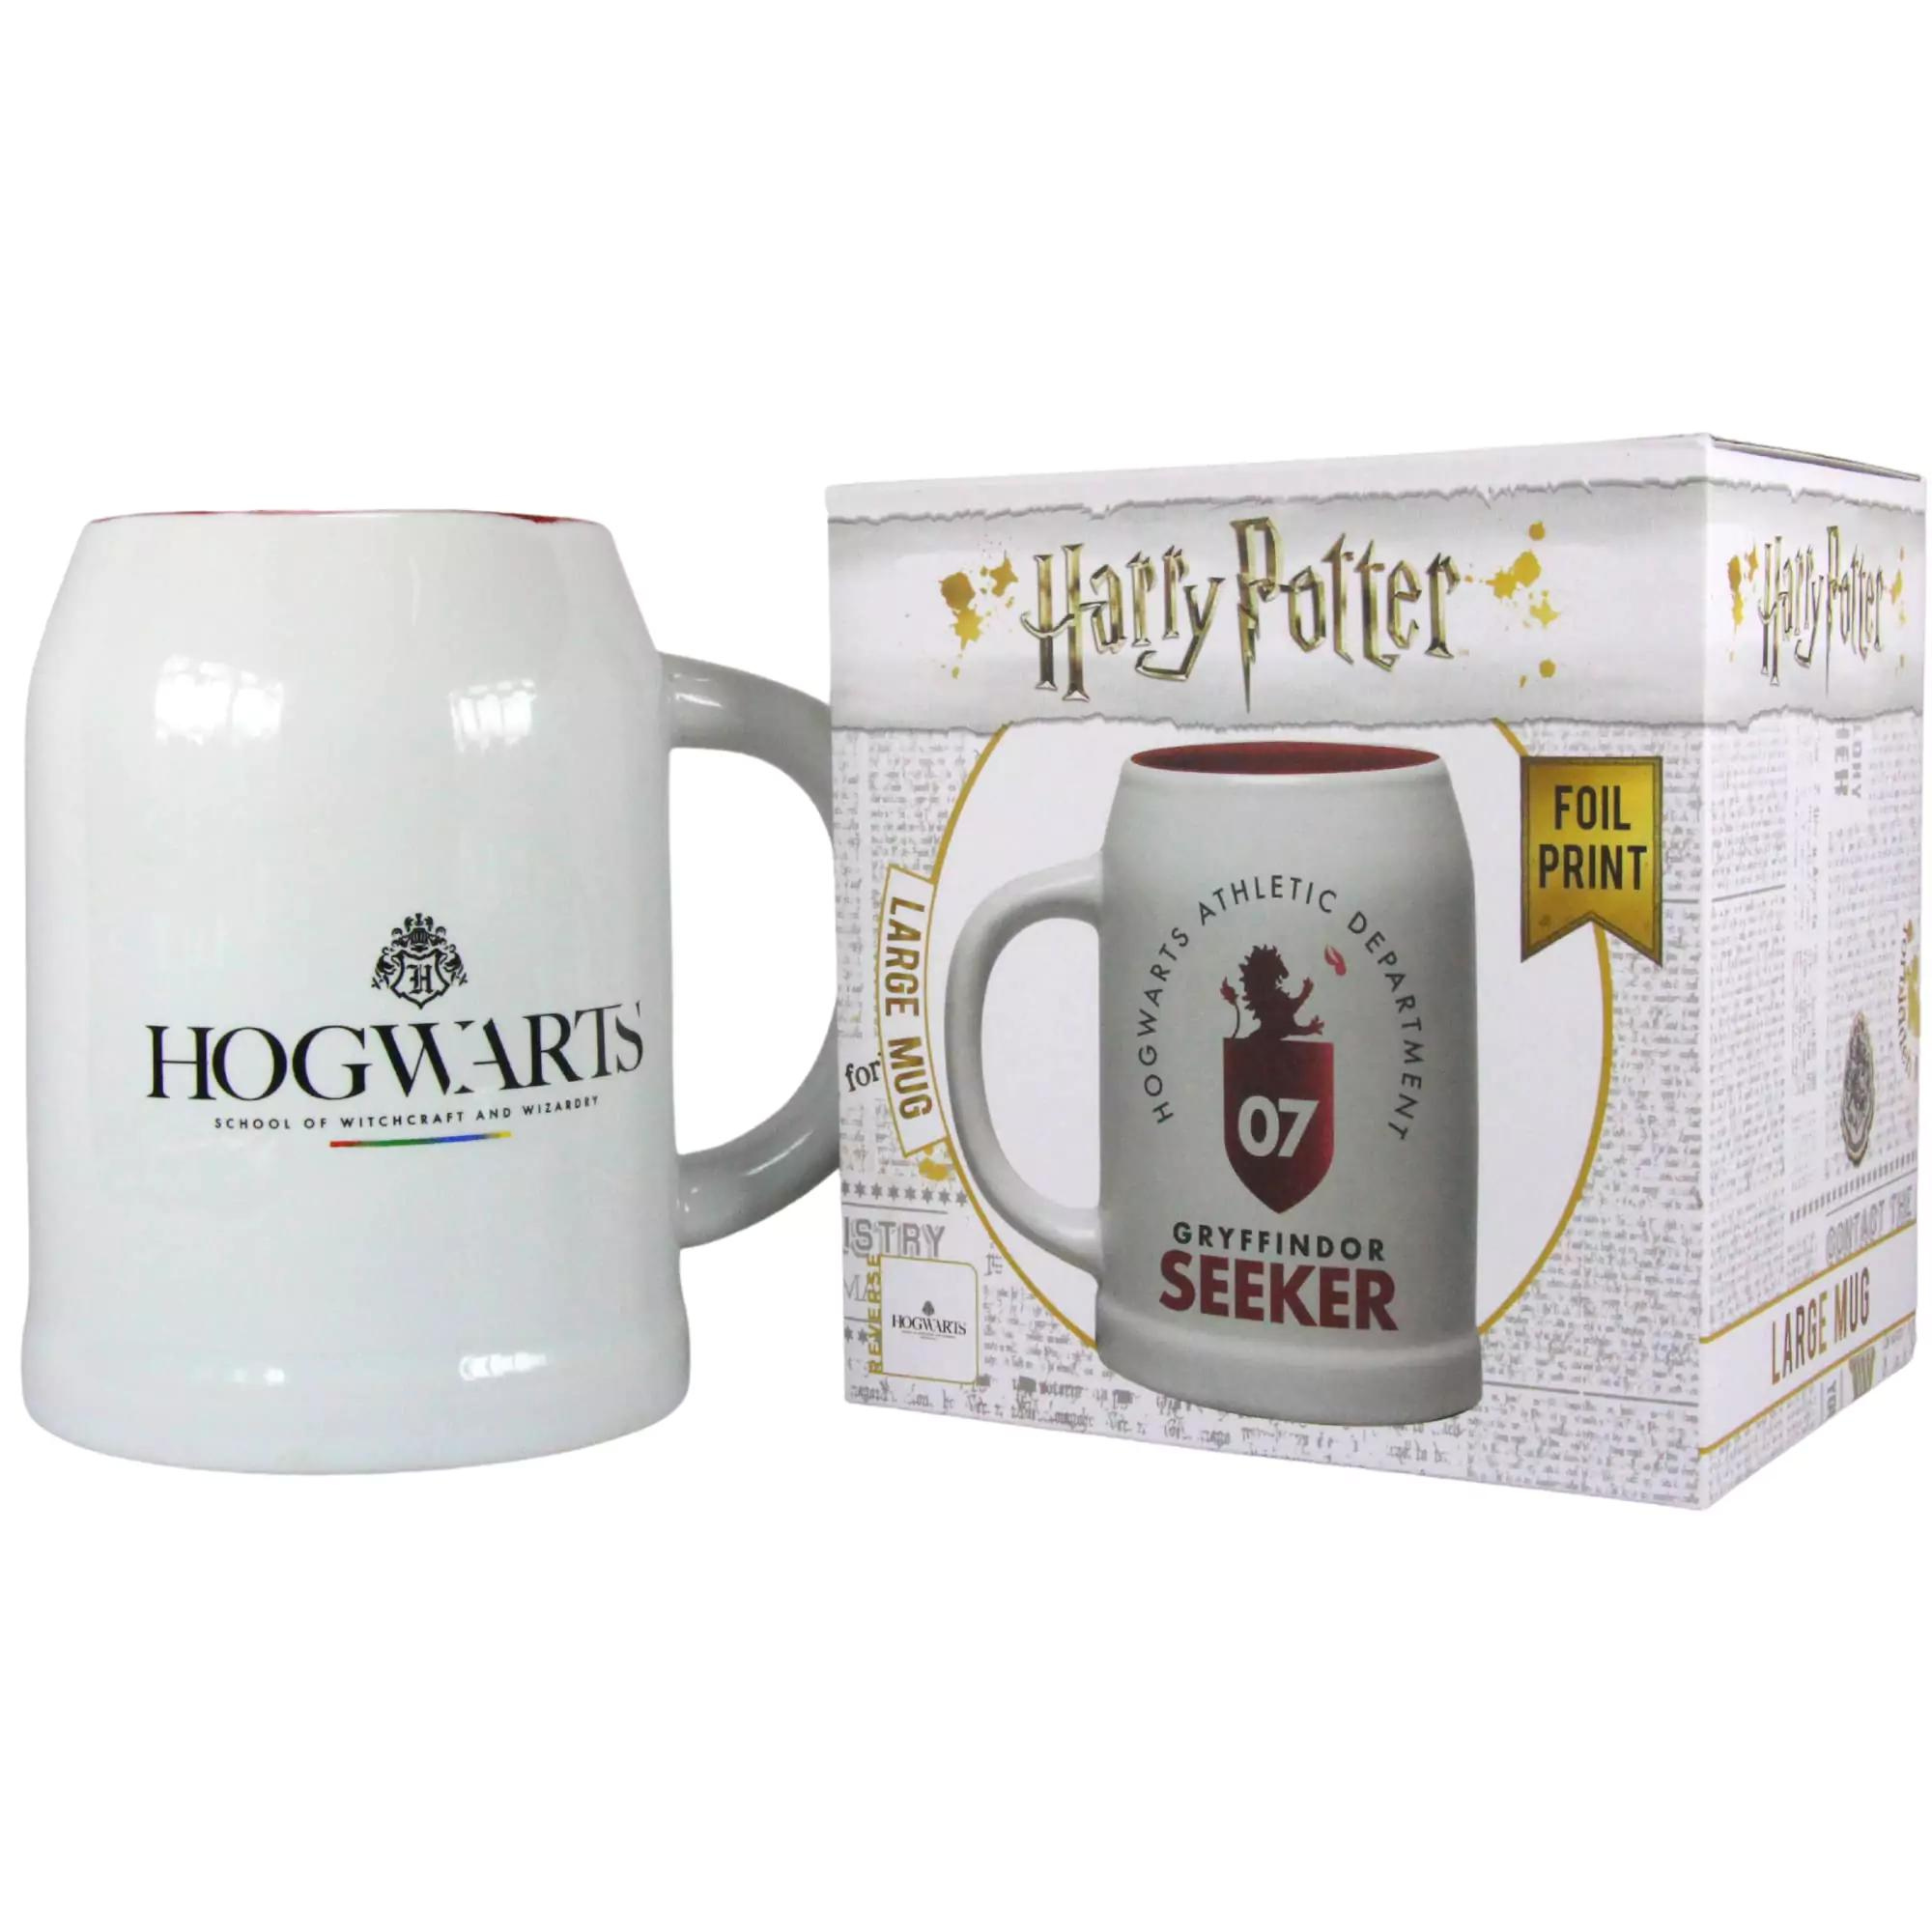 Harry Potter Hogwarts Gryffindor - Large 600ml Mug Ceramic Stein - Coffee/Tea Mug Twin Pack Gift Boxed - Toptoys2u